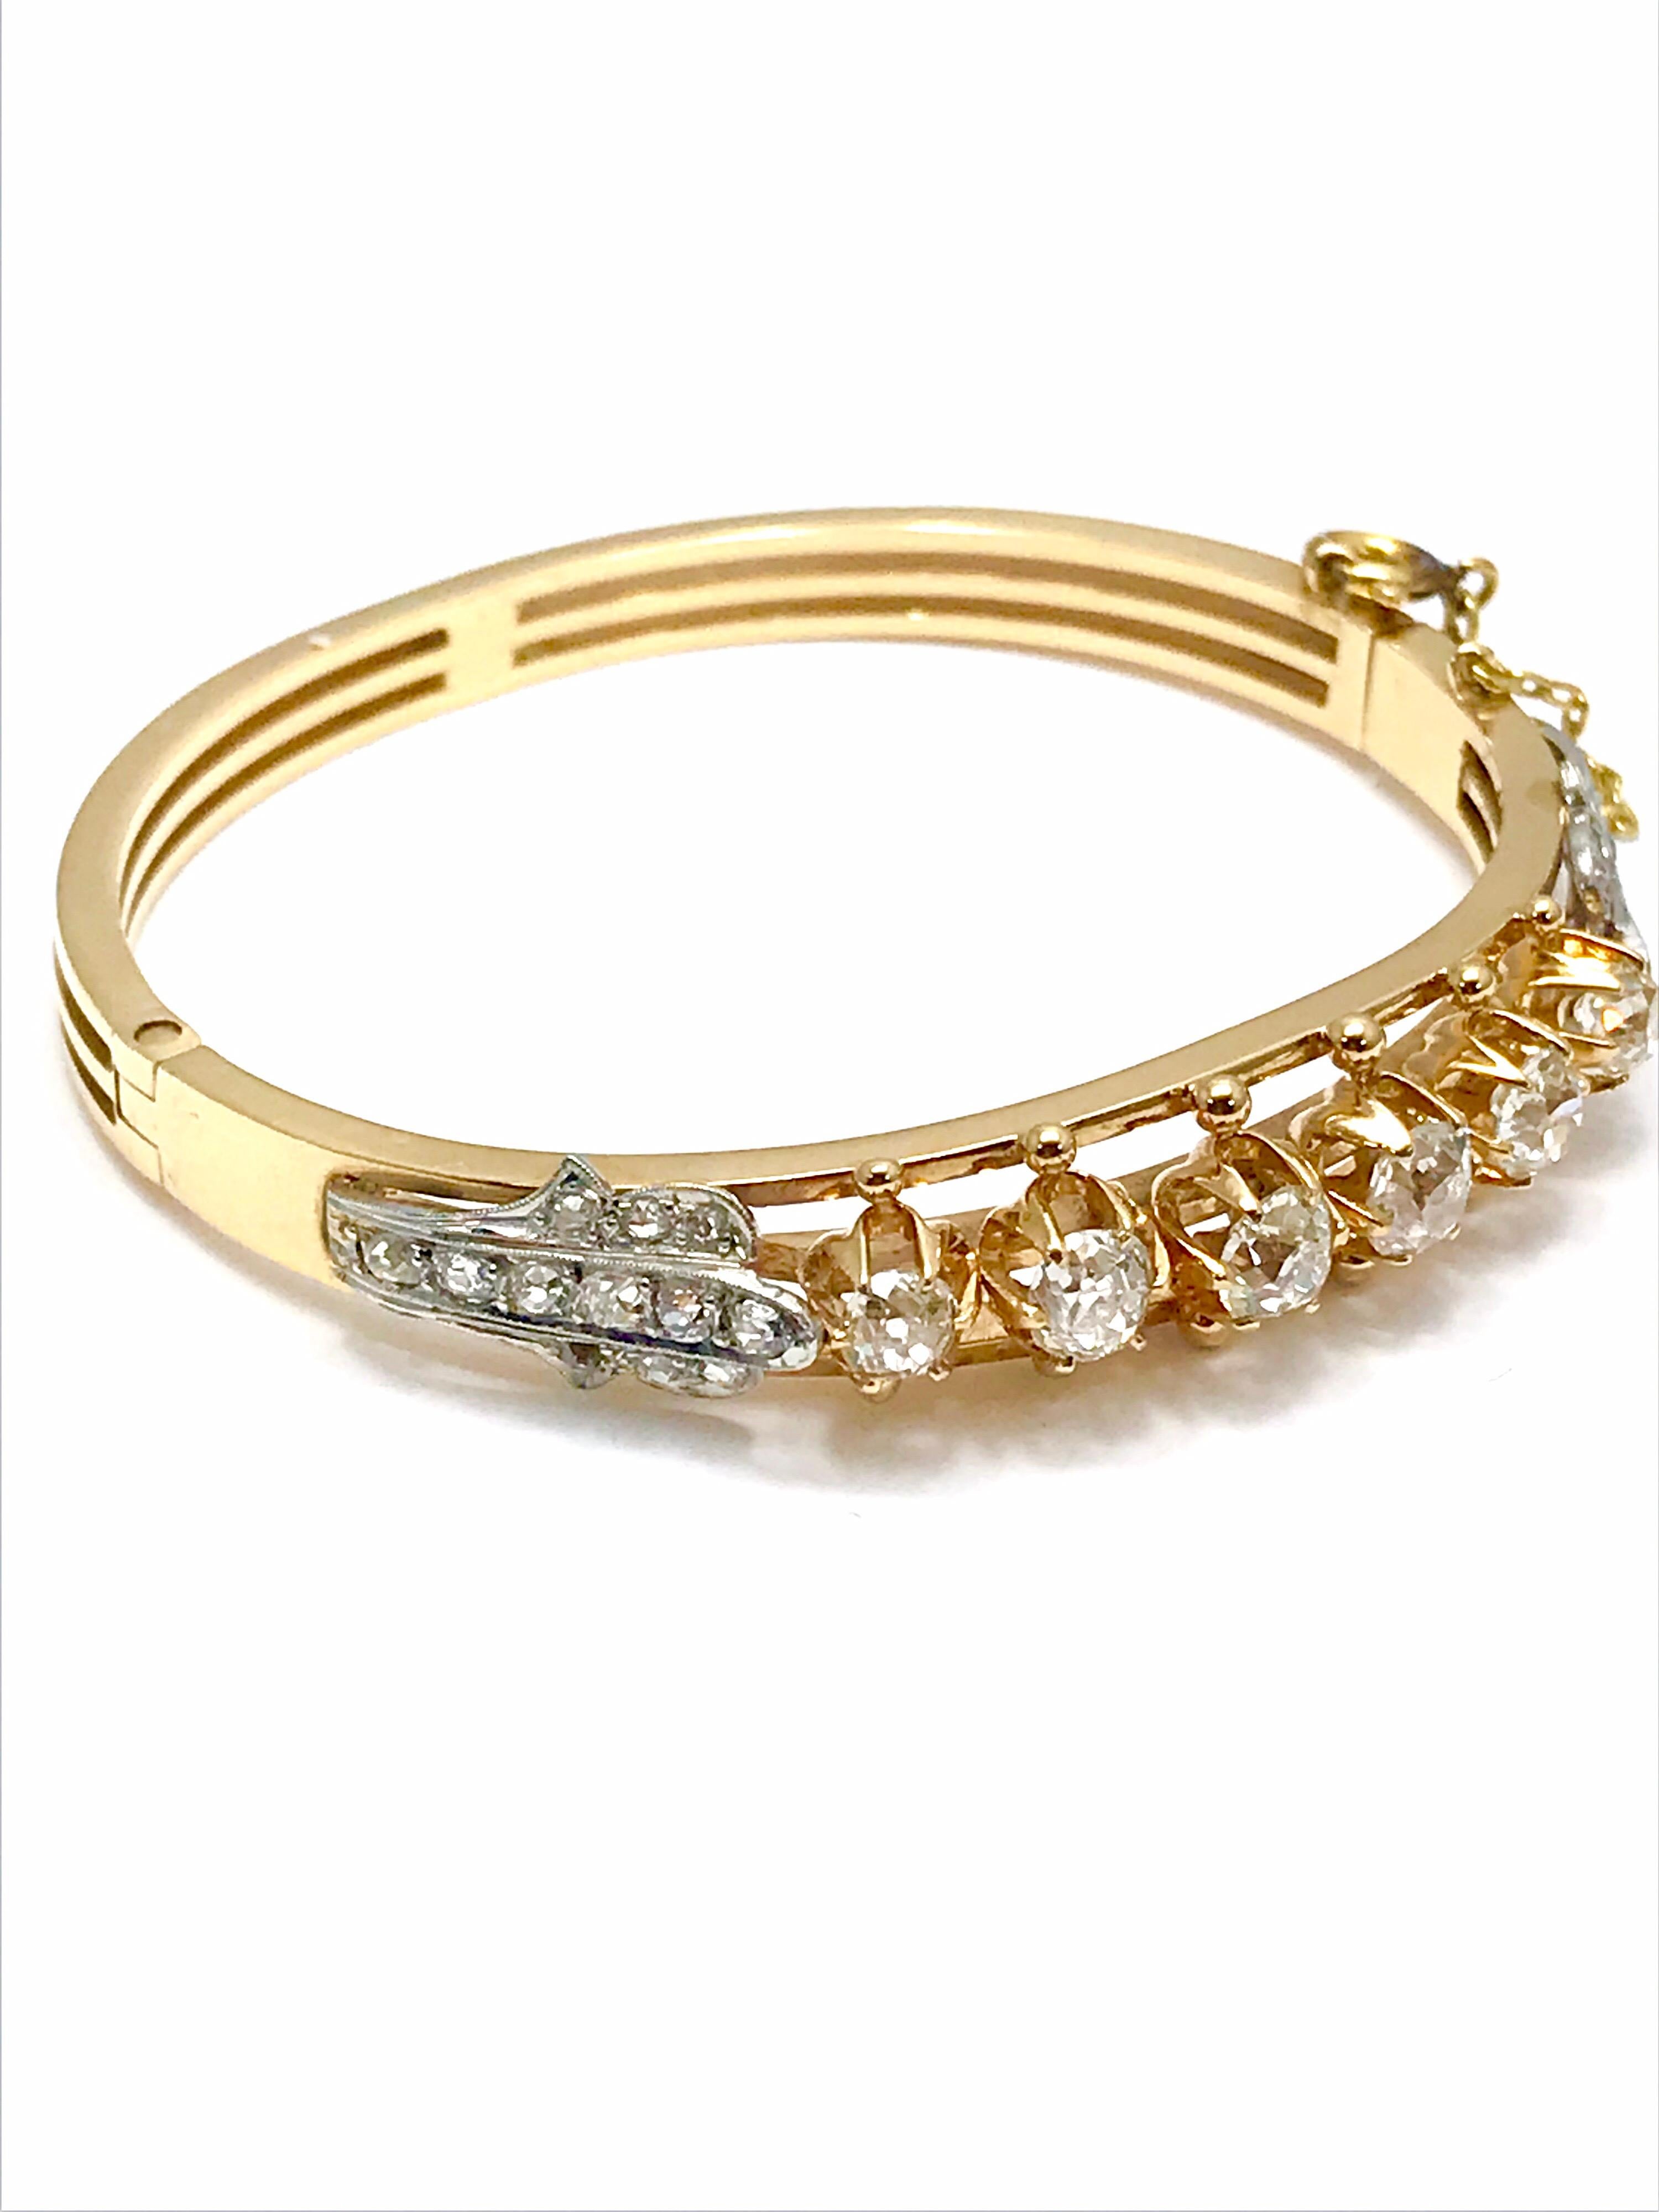 Women's or Men's 3.72 Carat Old Mine Cut and Rose Cut Diamond Yellow Gold Bangle Bracelet